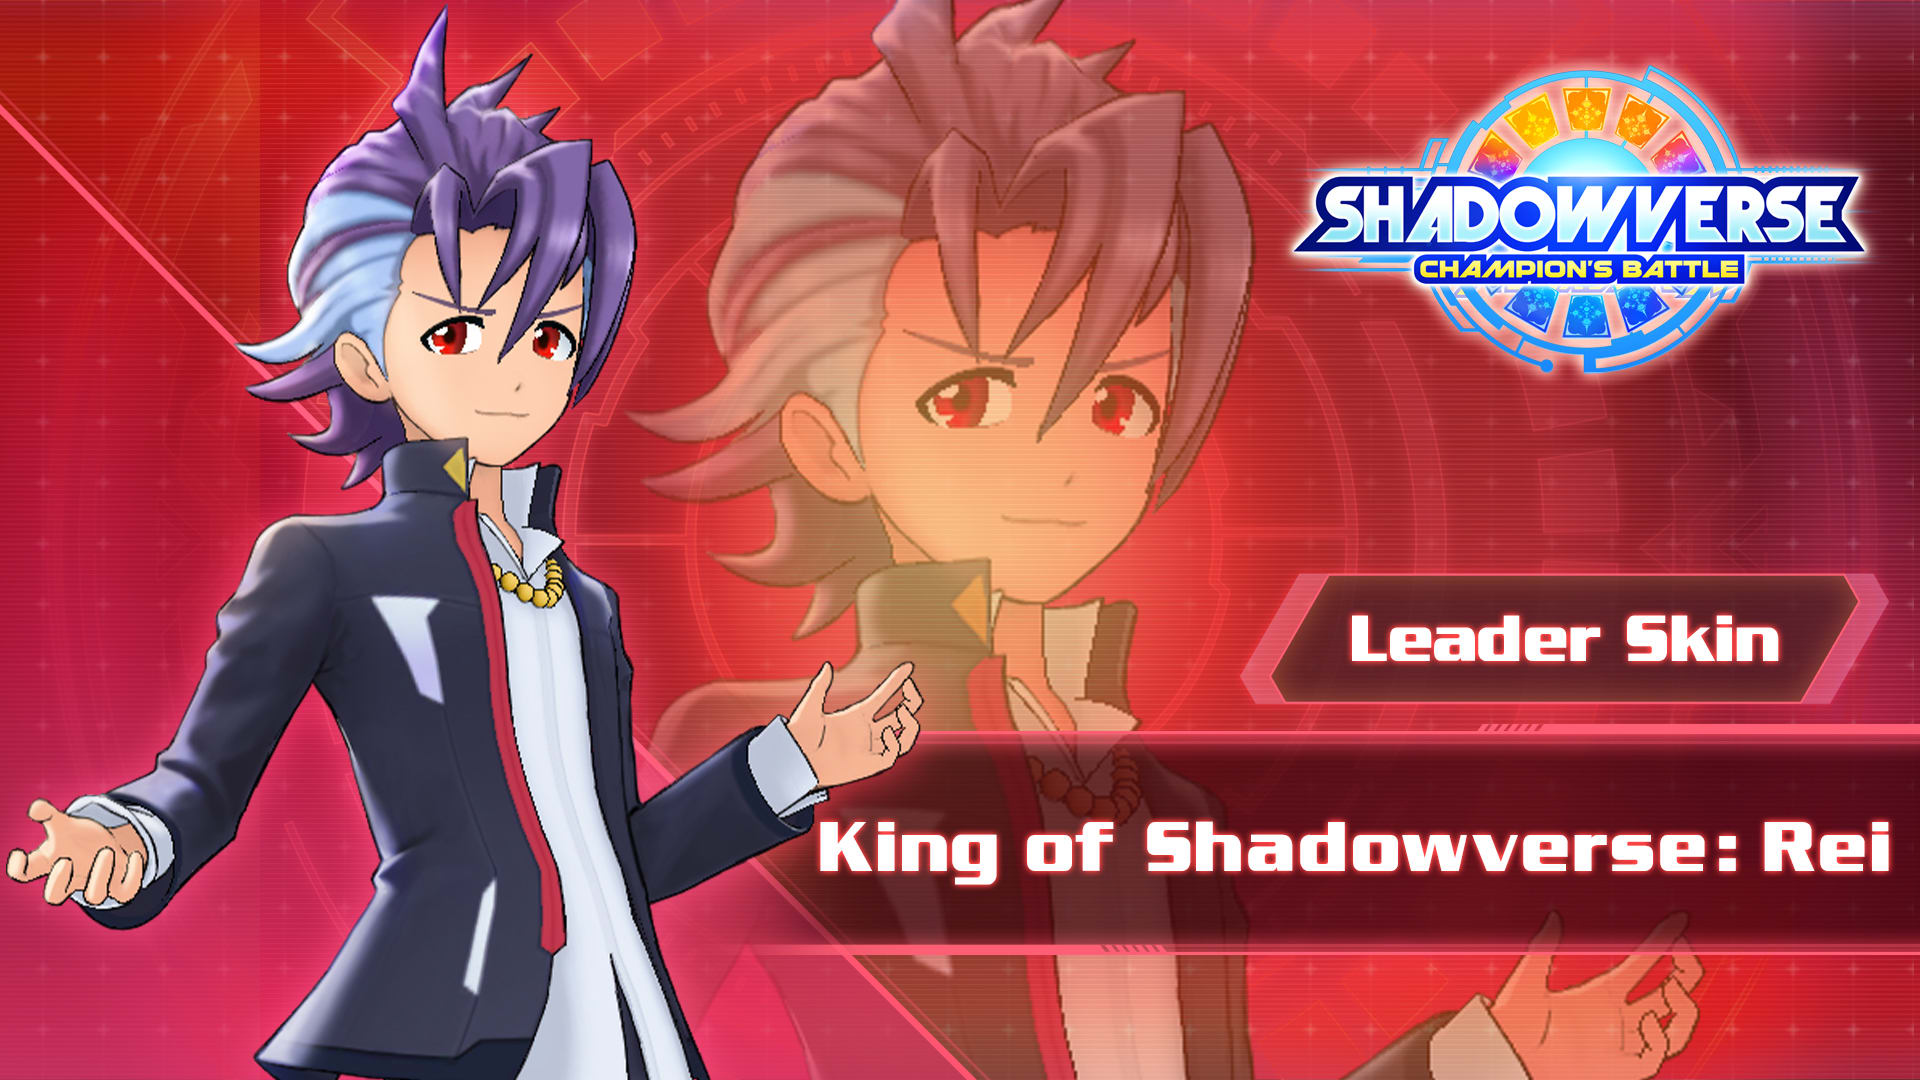 Leader Skin: "King of Shadowverse: Rei"